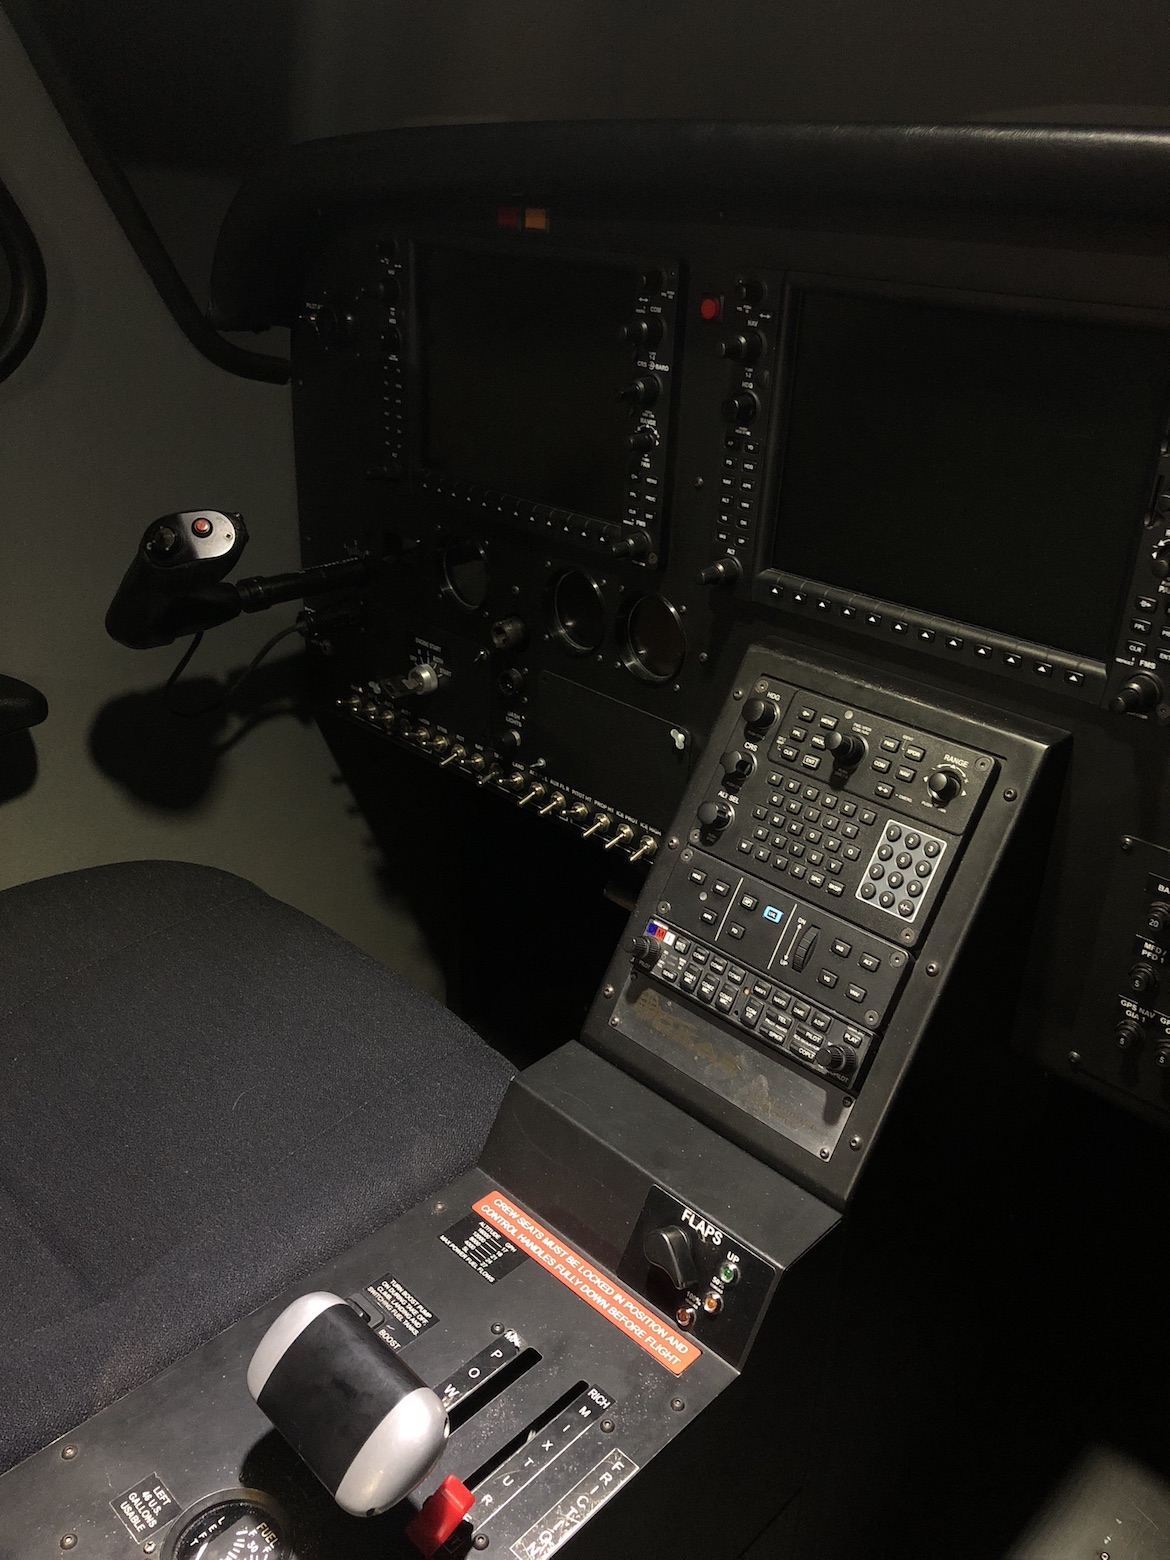 Flight controls on the flightdeck of the Cirrus simulator. (Stef Drury)